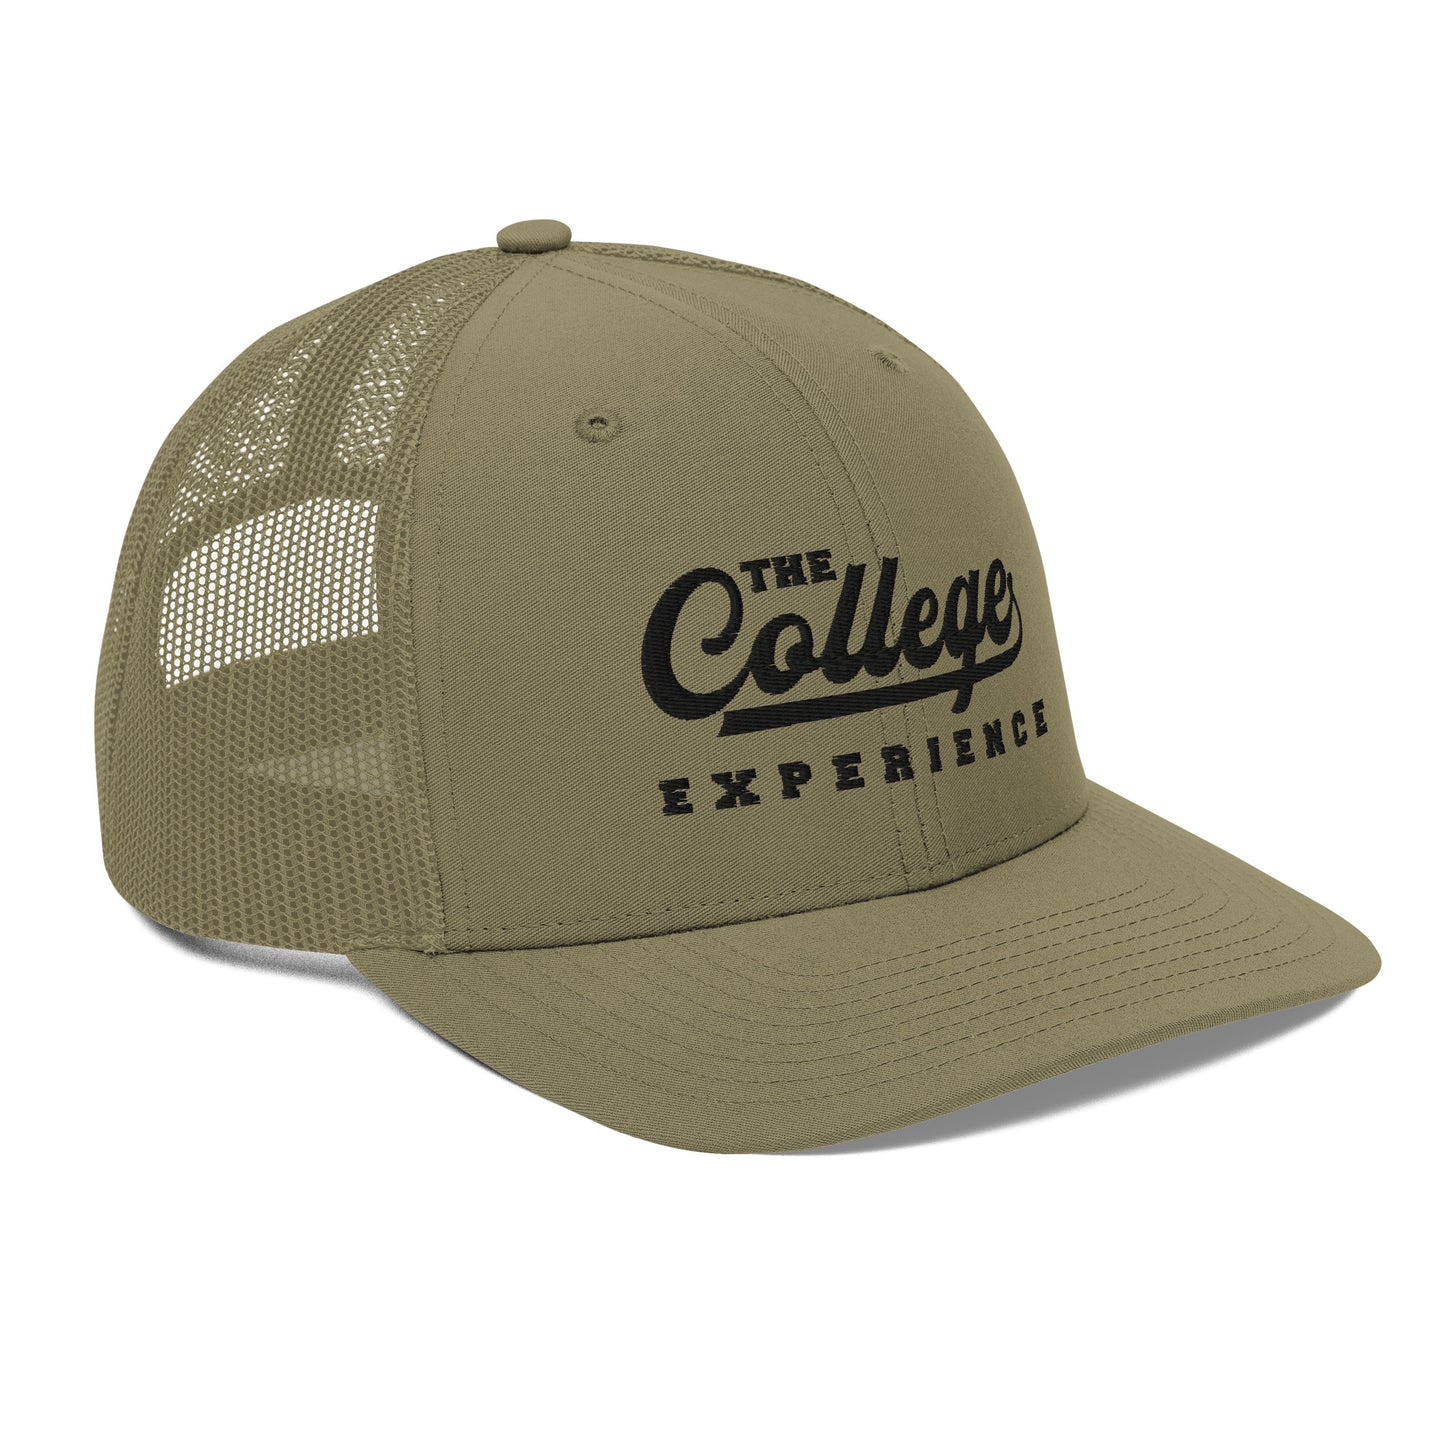 The College Experience - Trucker Cap (Black Logo)